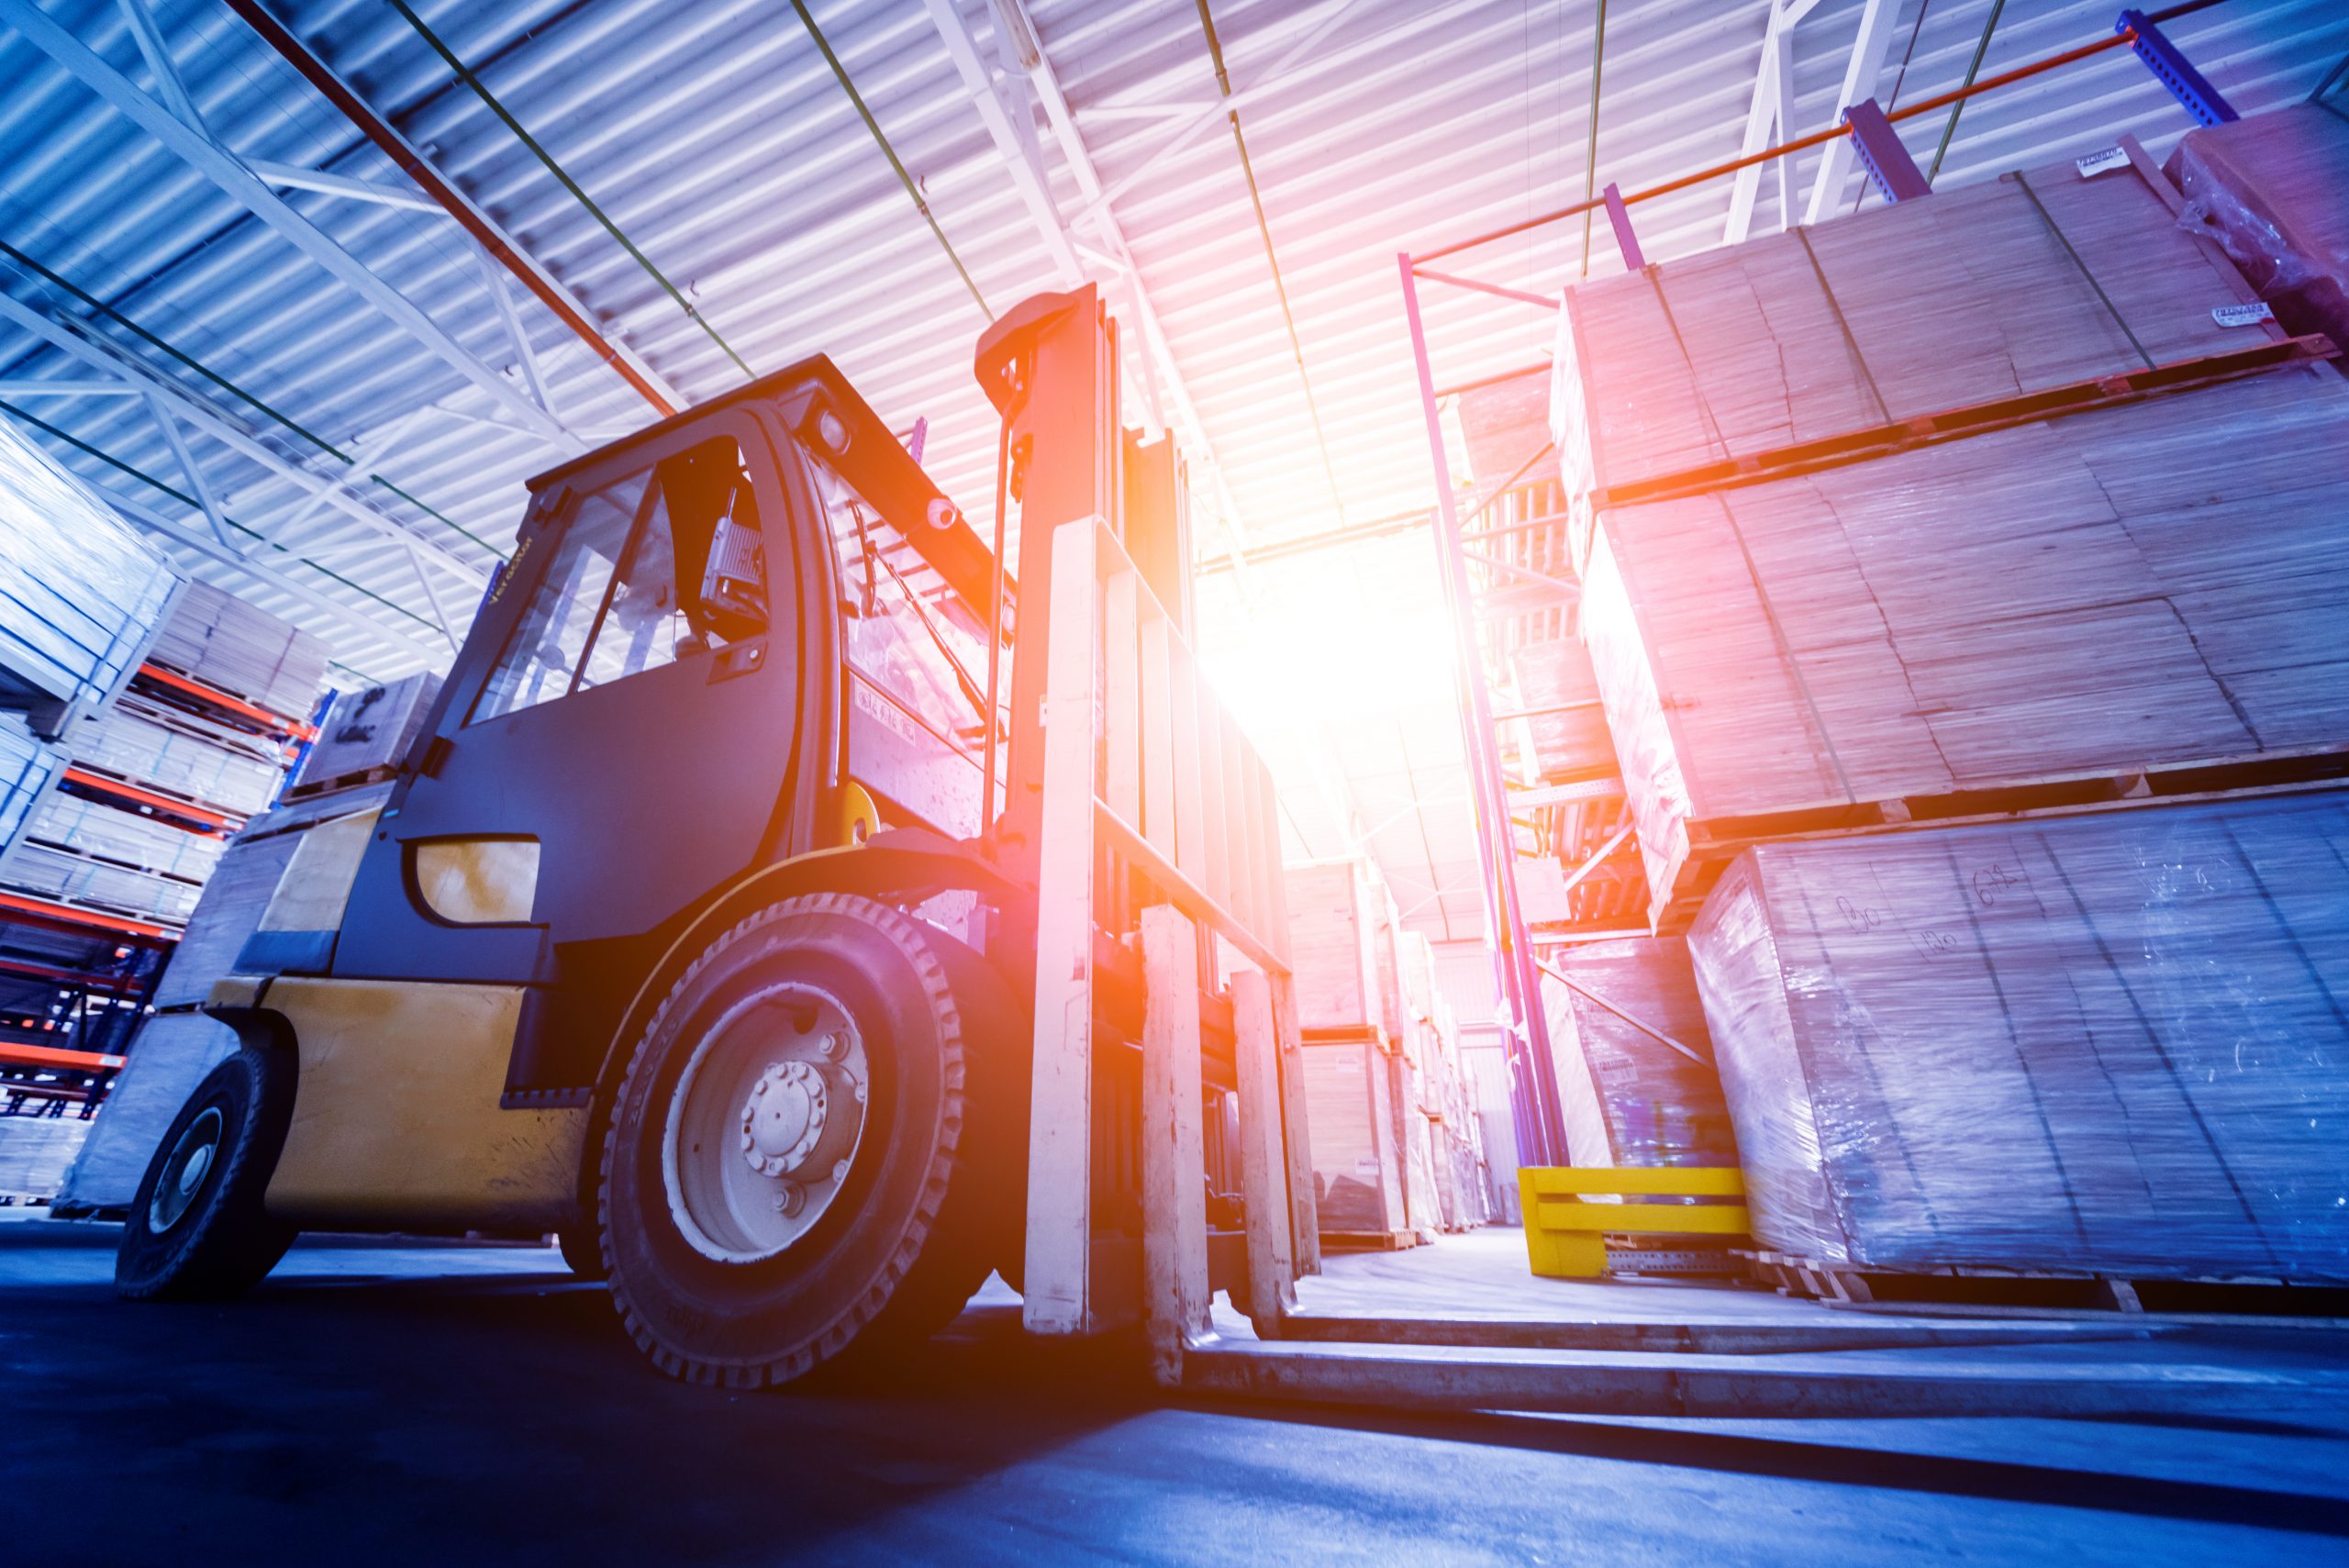 Forklift loader in storage warehouse ship yard. Distribution products. Delivery. Logistics. Transportation. Business background.